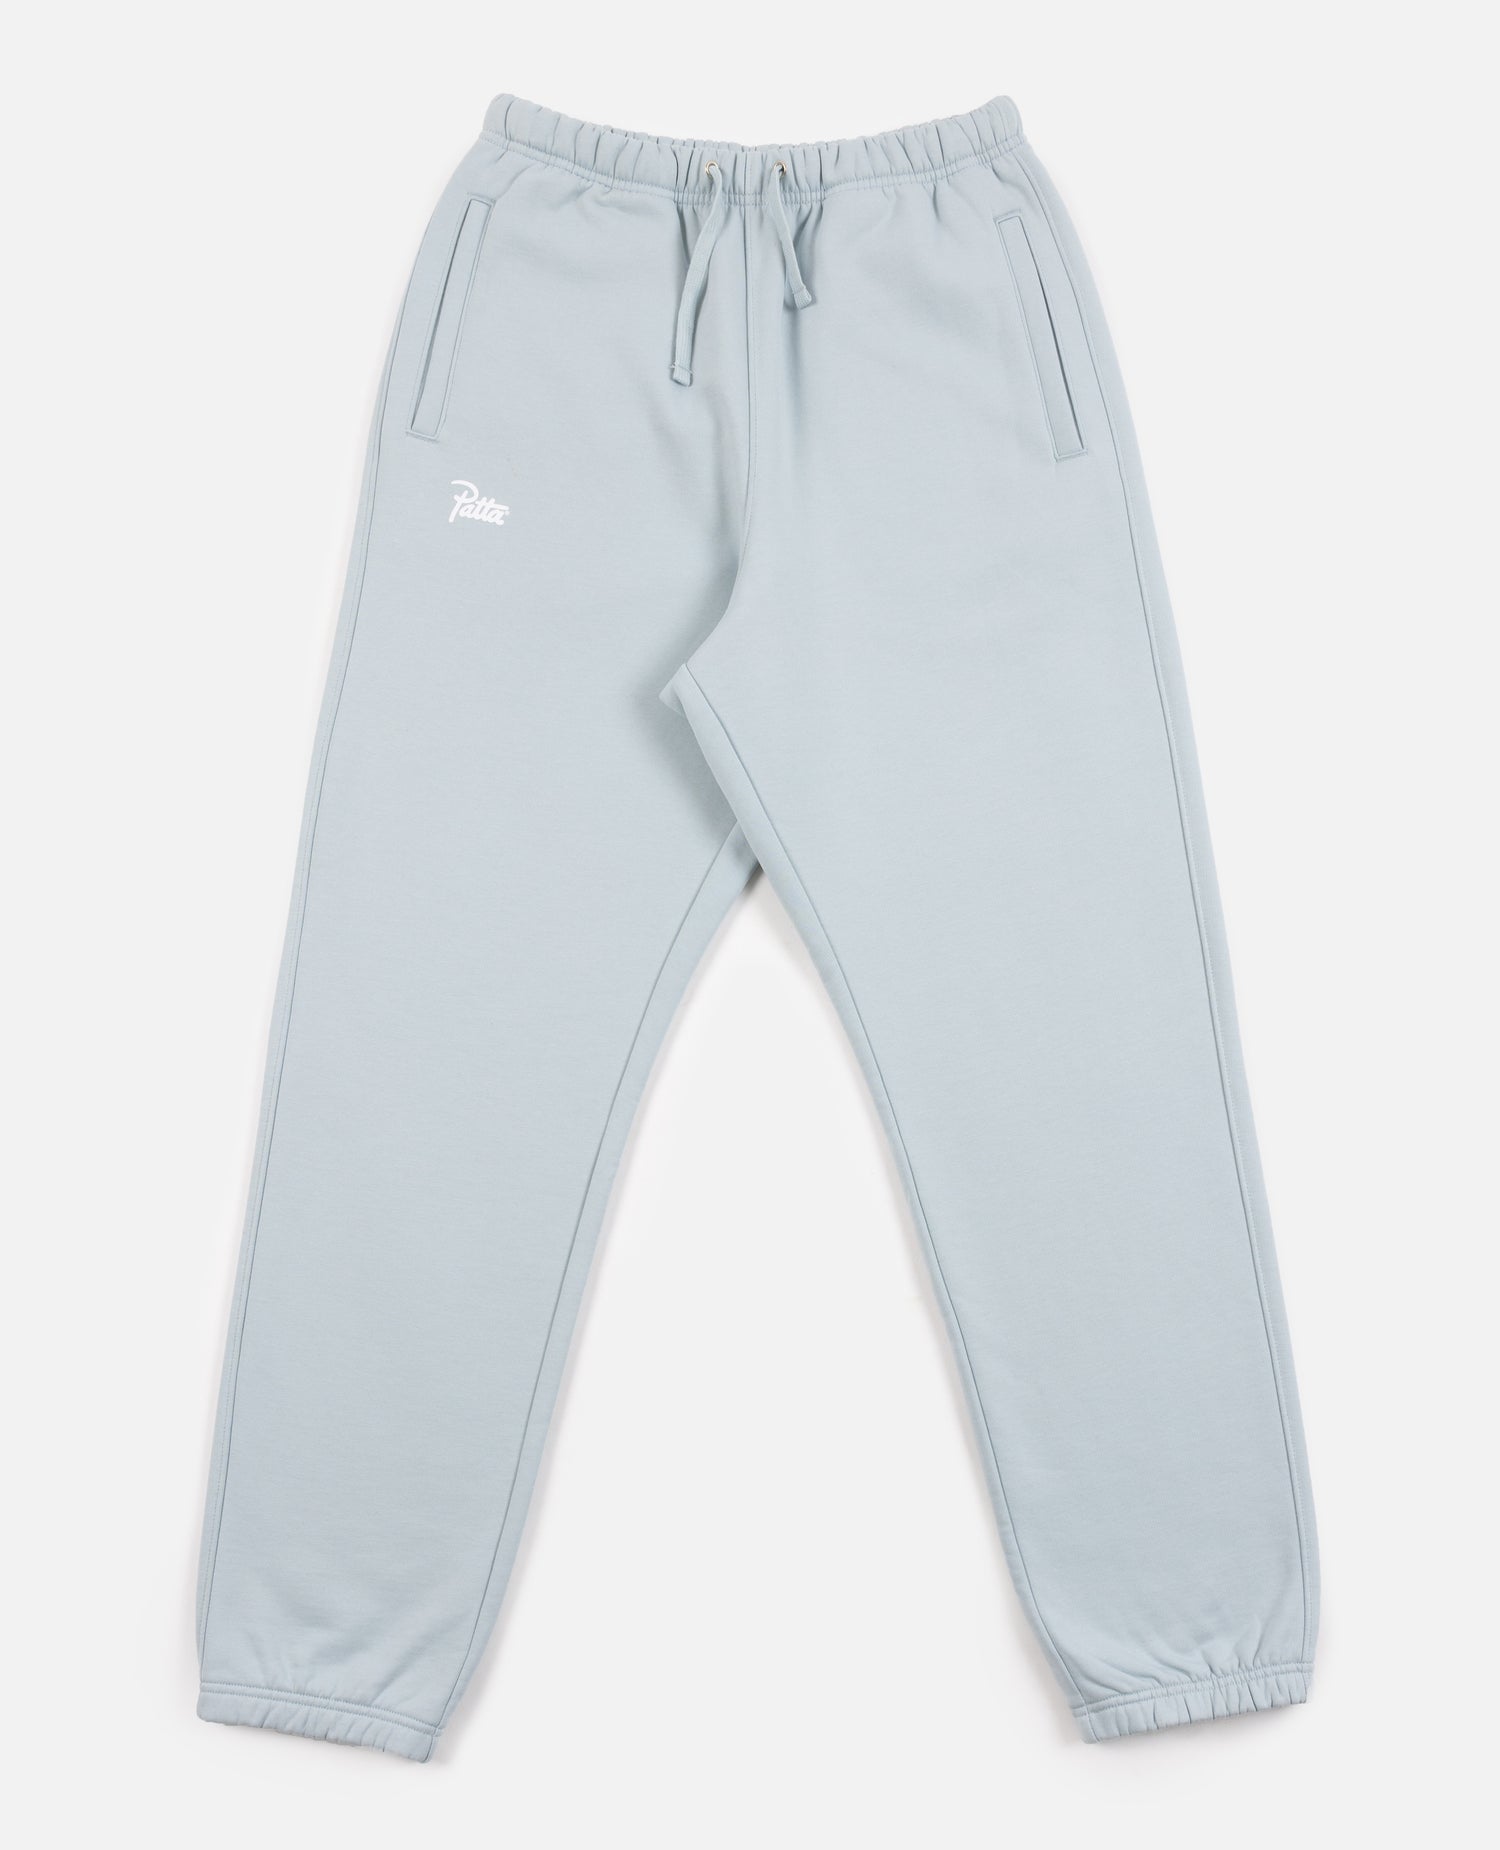 Pantaloni da jogging Patta Basic (blu perla)